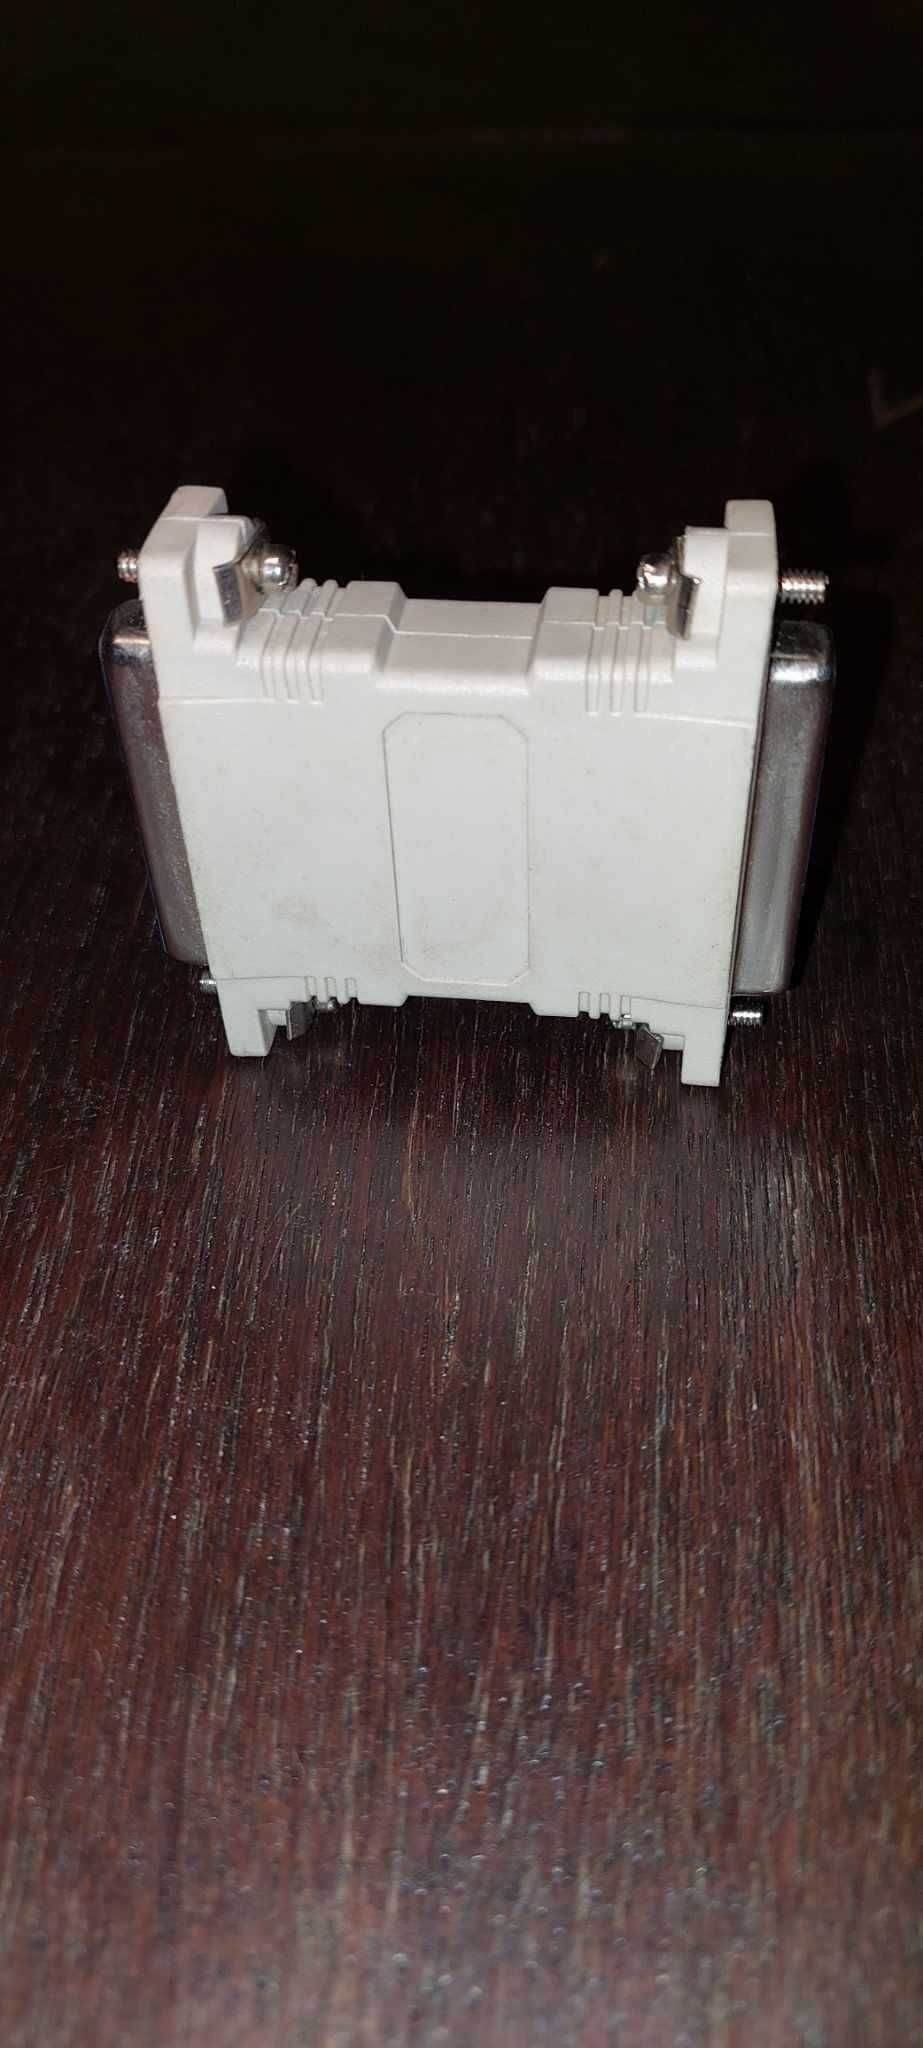 Kable D-Sub DB25 (25-pin), DB9 (9 pin), Centronics, adapter - 7 szt.